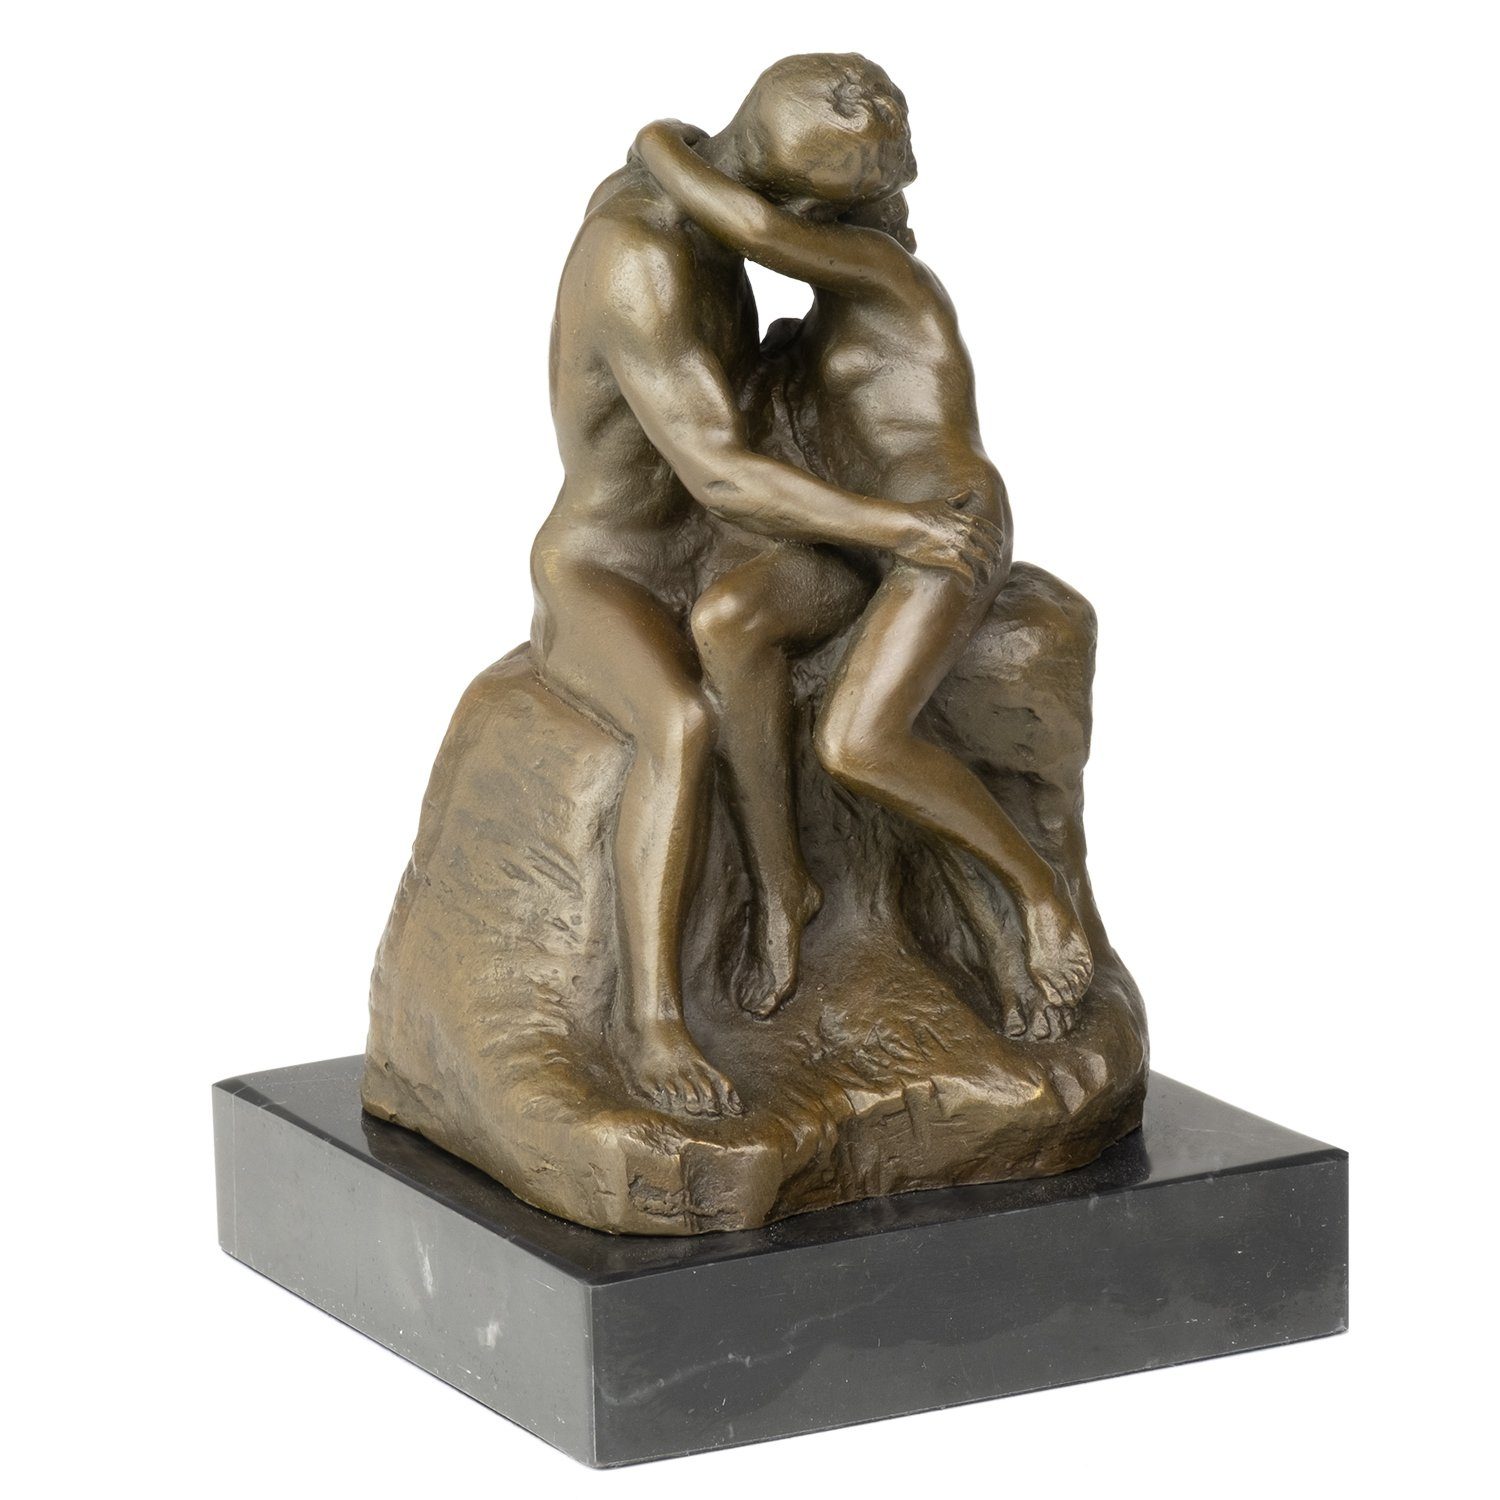 Moritz Bronzefigur von Antik-Stil Kuss Skulptur Rodin, Skulpturen Figuren Statue